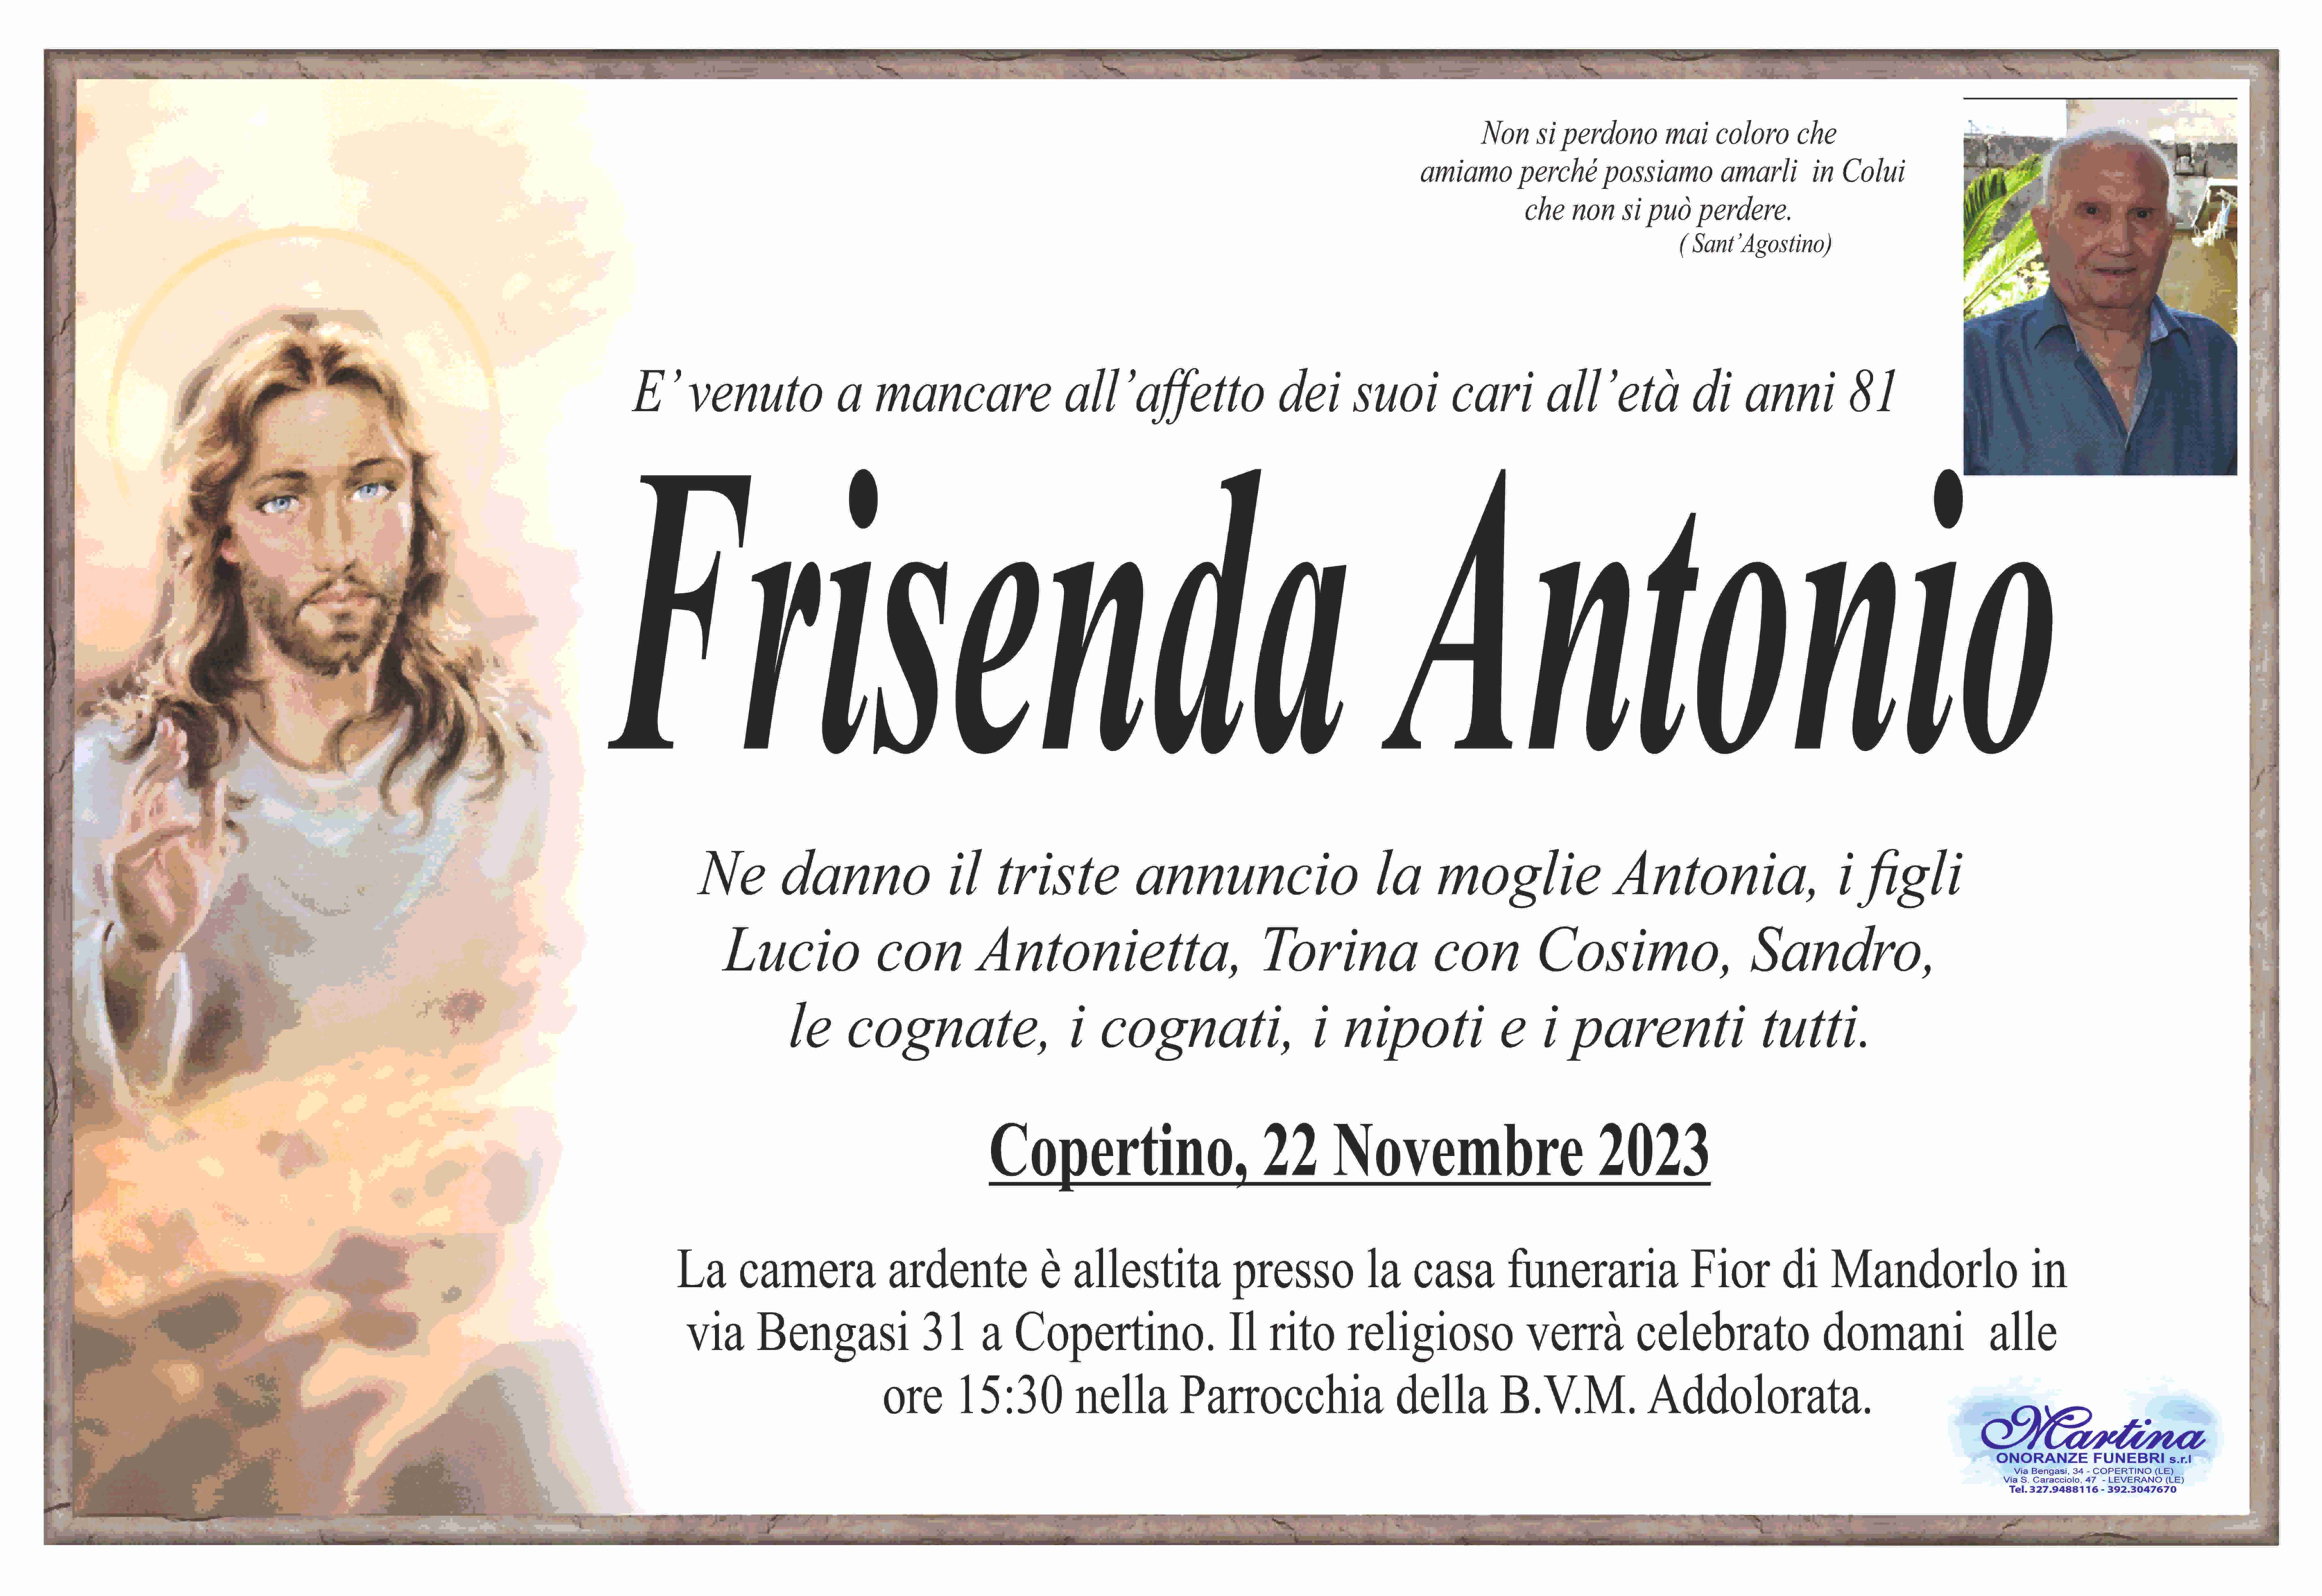 Antonio Frisenda